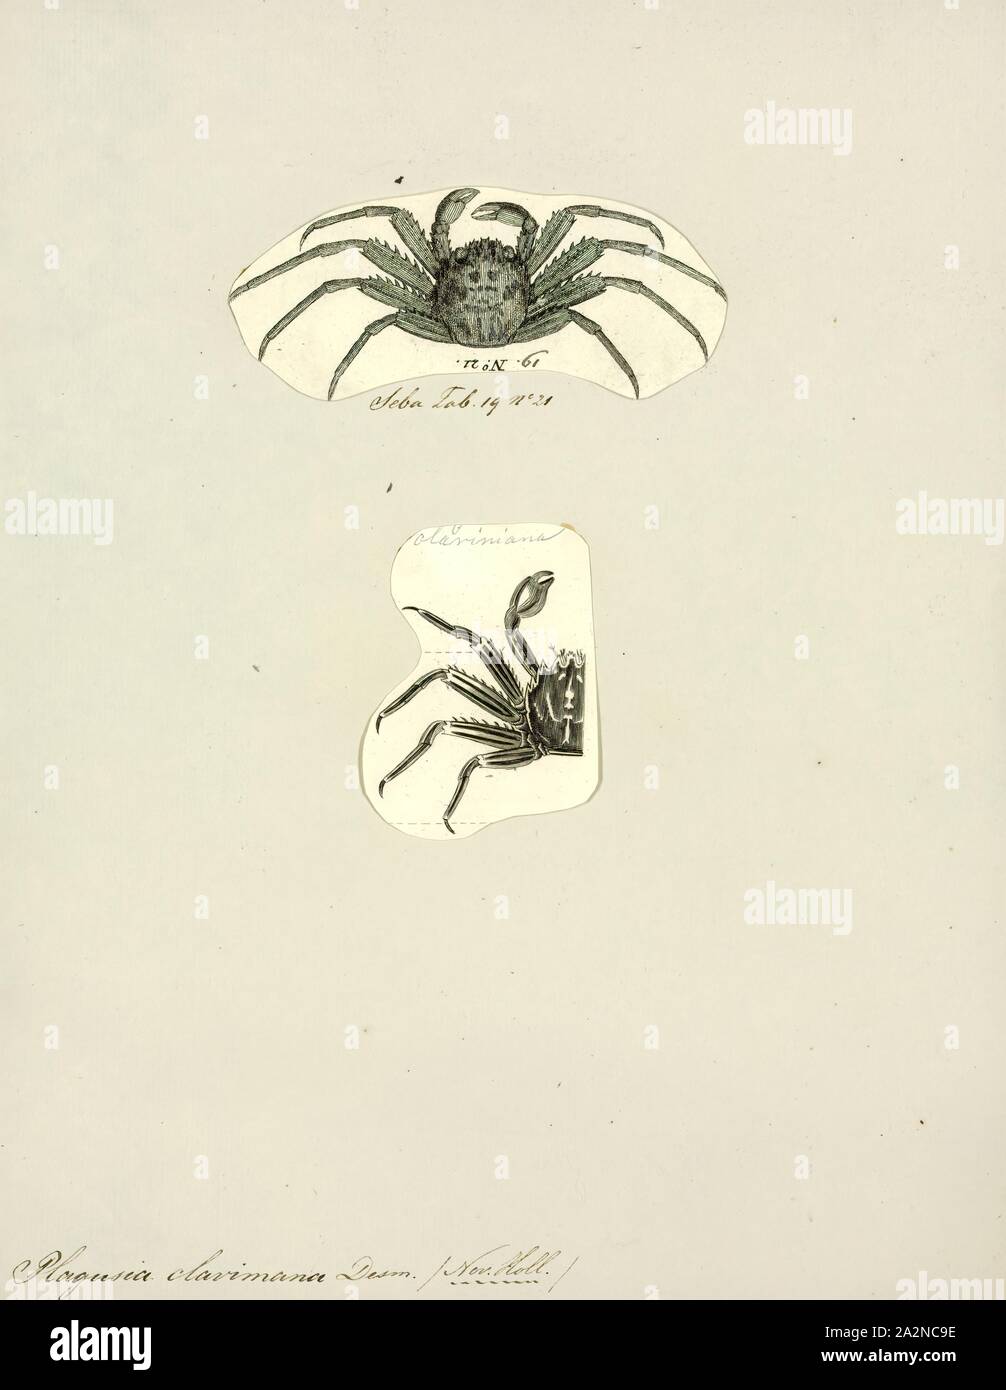 Plagusia clavimana, Print, Plagusia is a genus of crabs in the family Plagusiidae Stock Photo